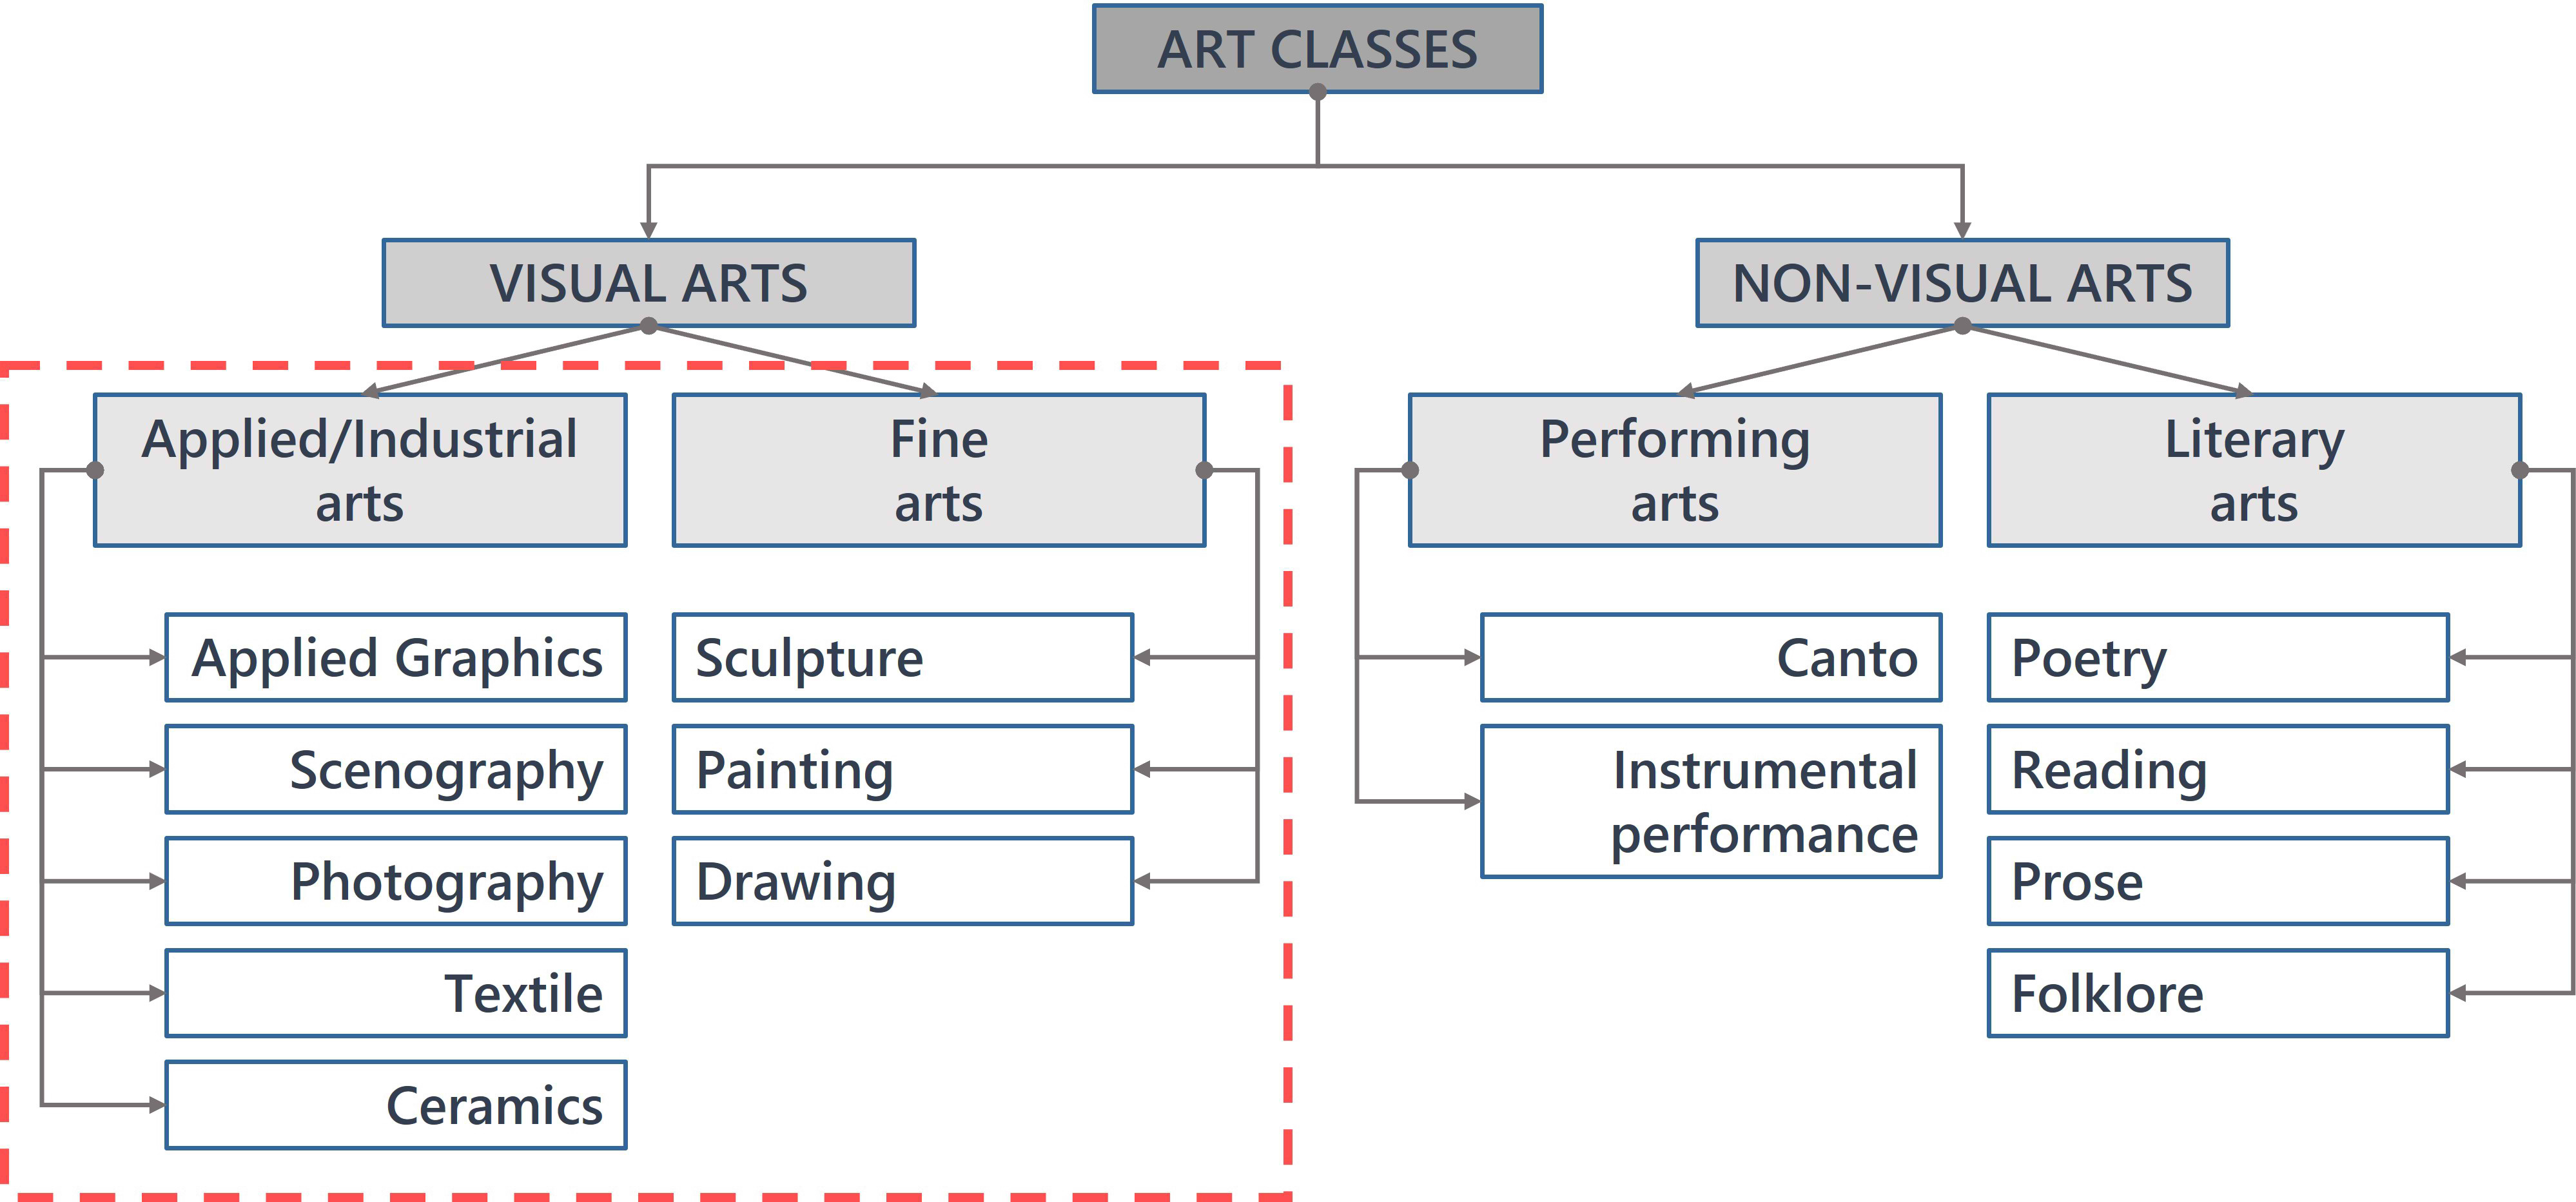 Art classes in the ‘Jordan Misja’ art school.